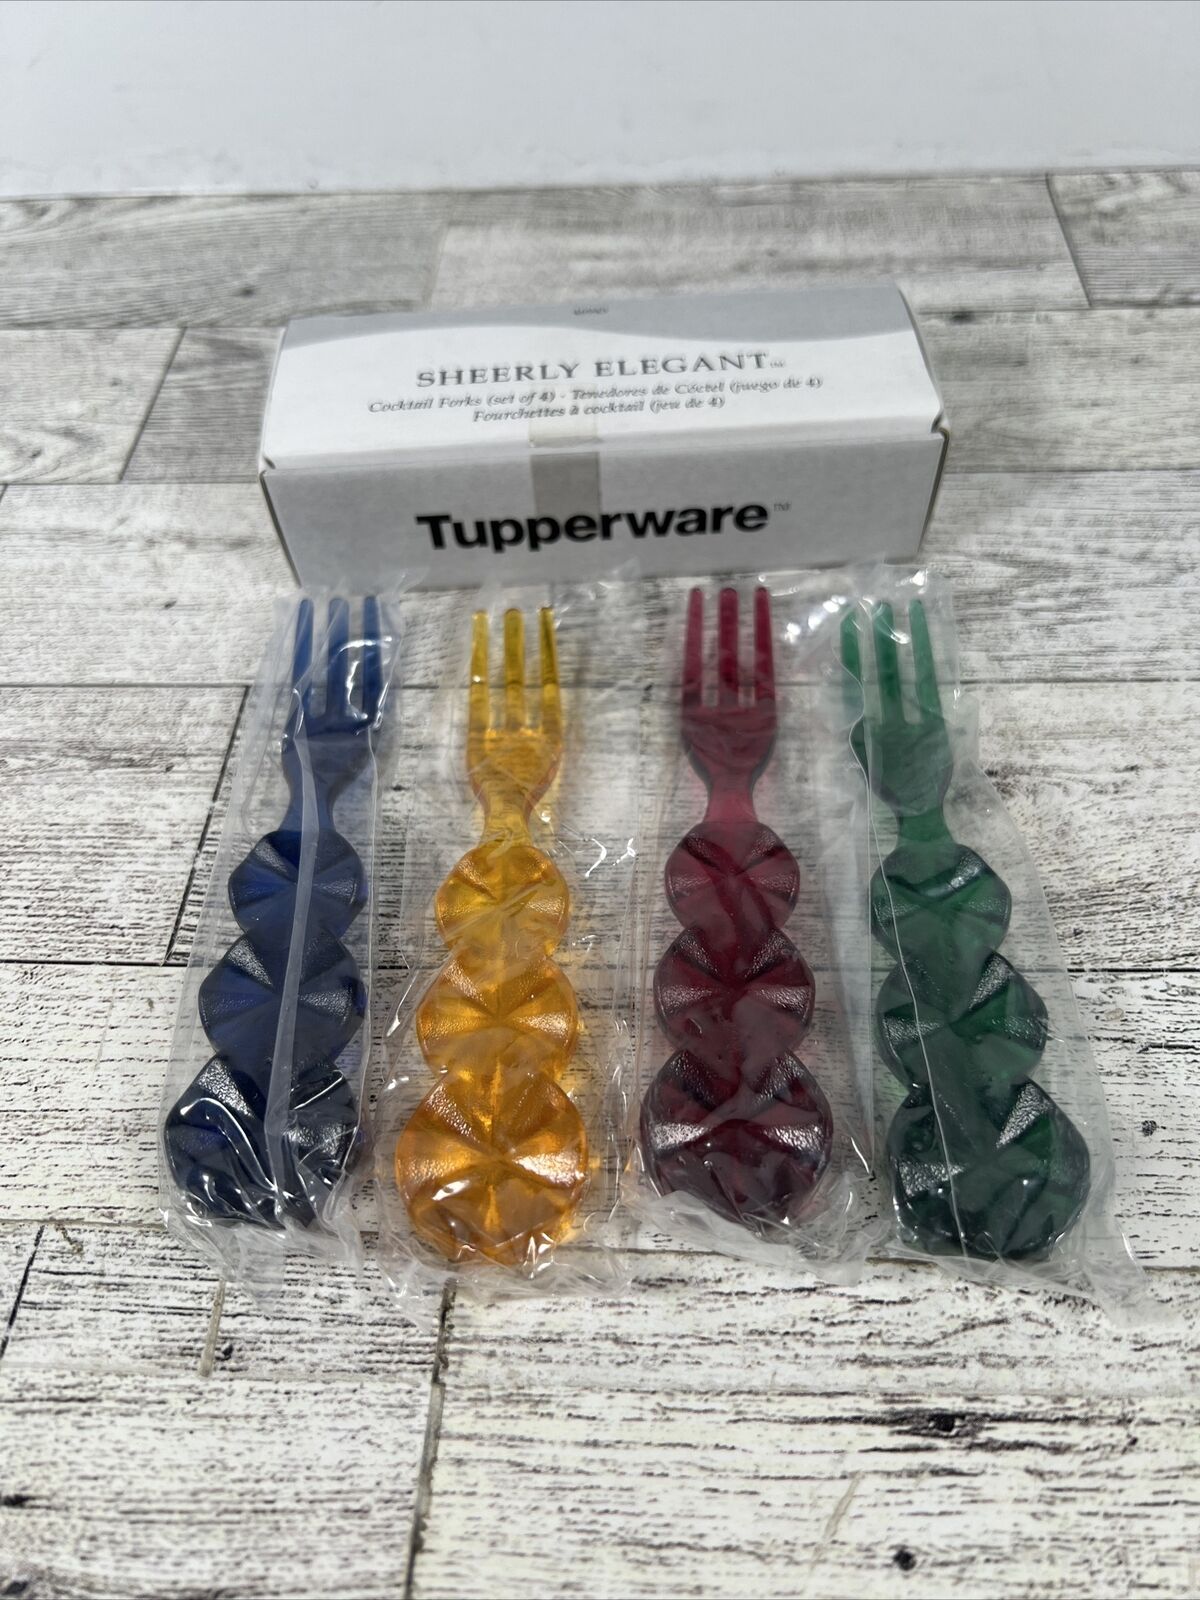 Tupperware Cocktail Sheerly Elegant Jewel Tone Forks Vintage Boxed Set New